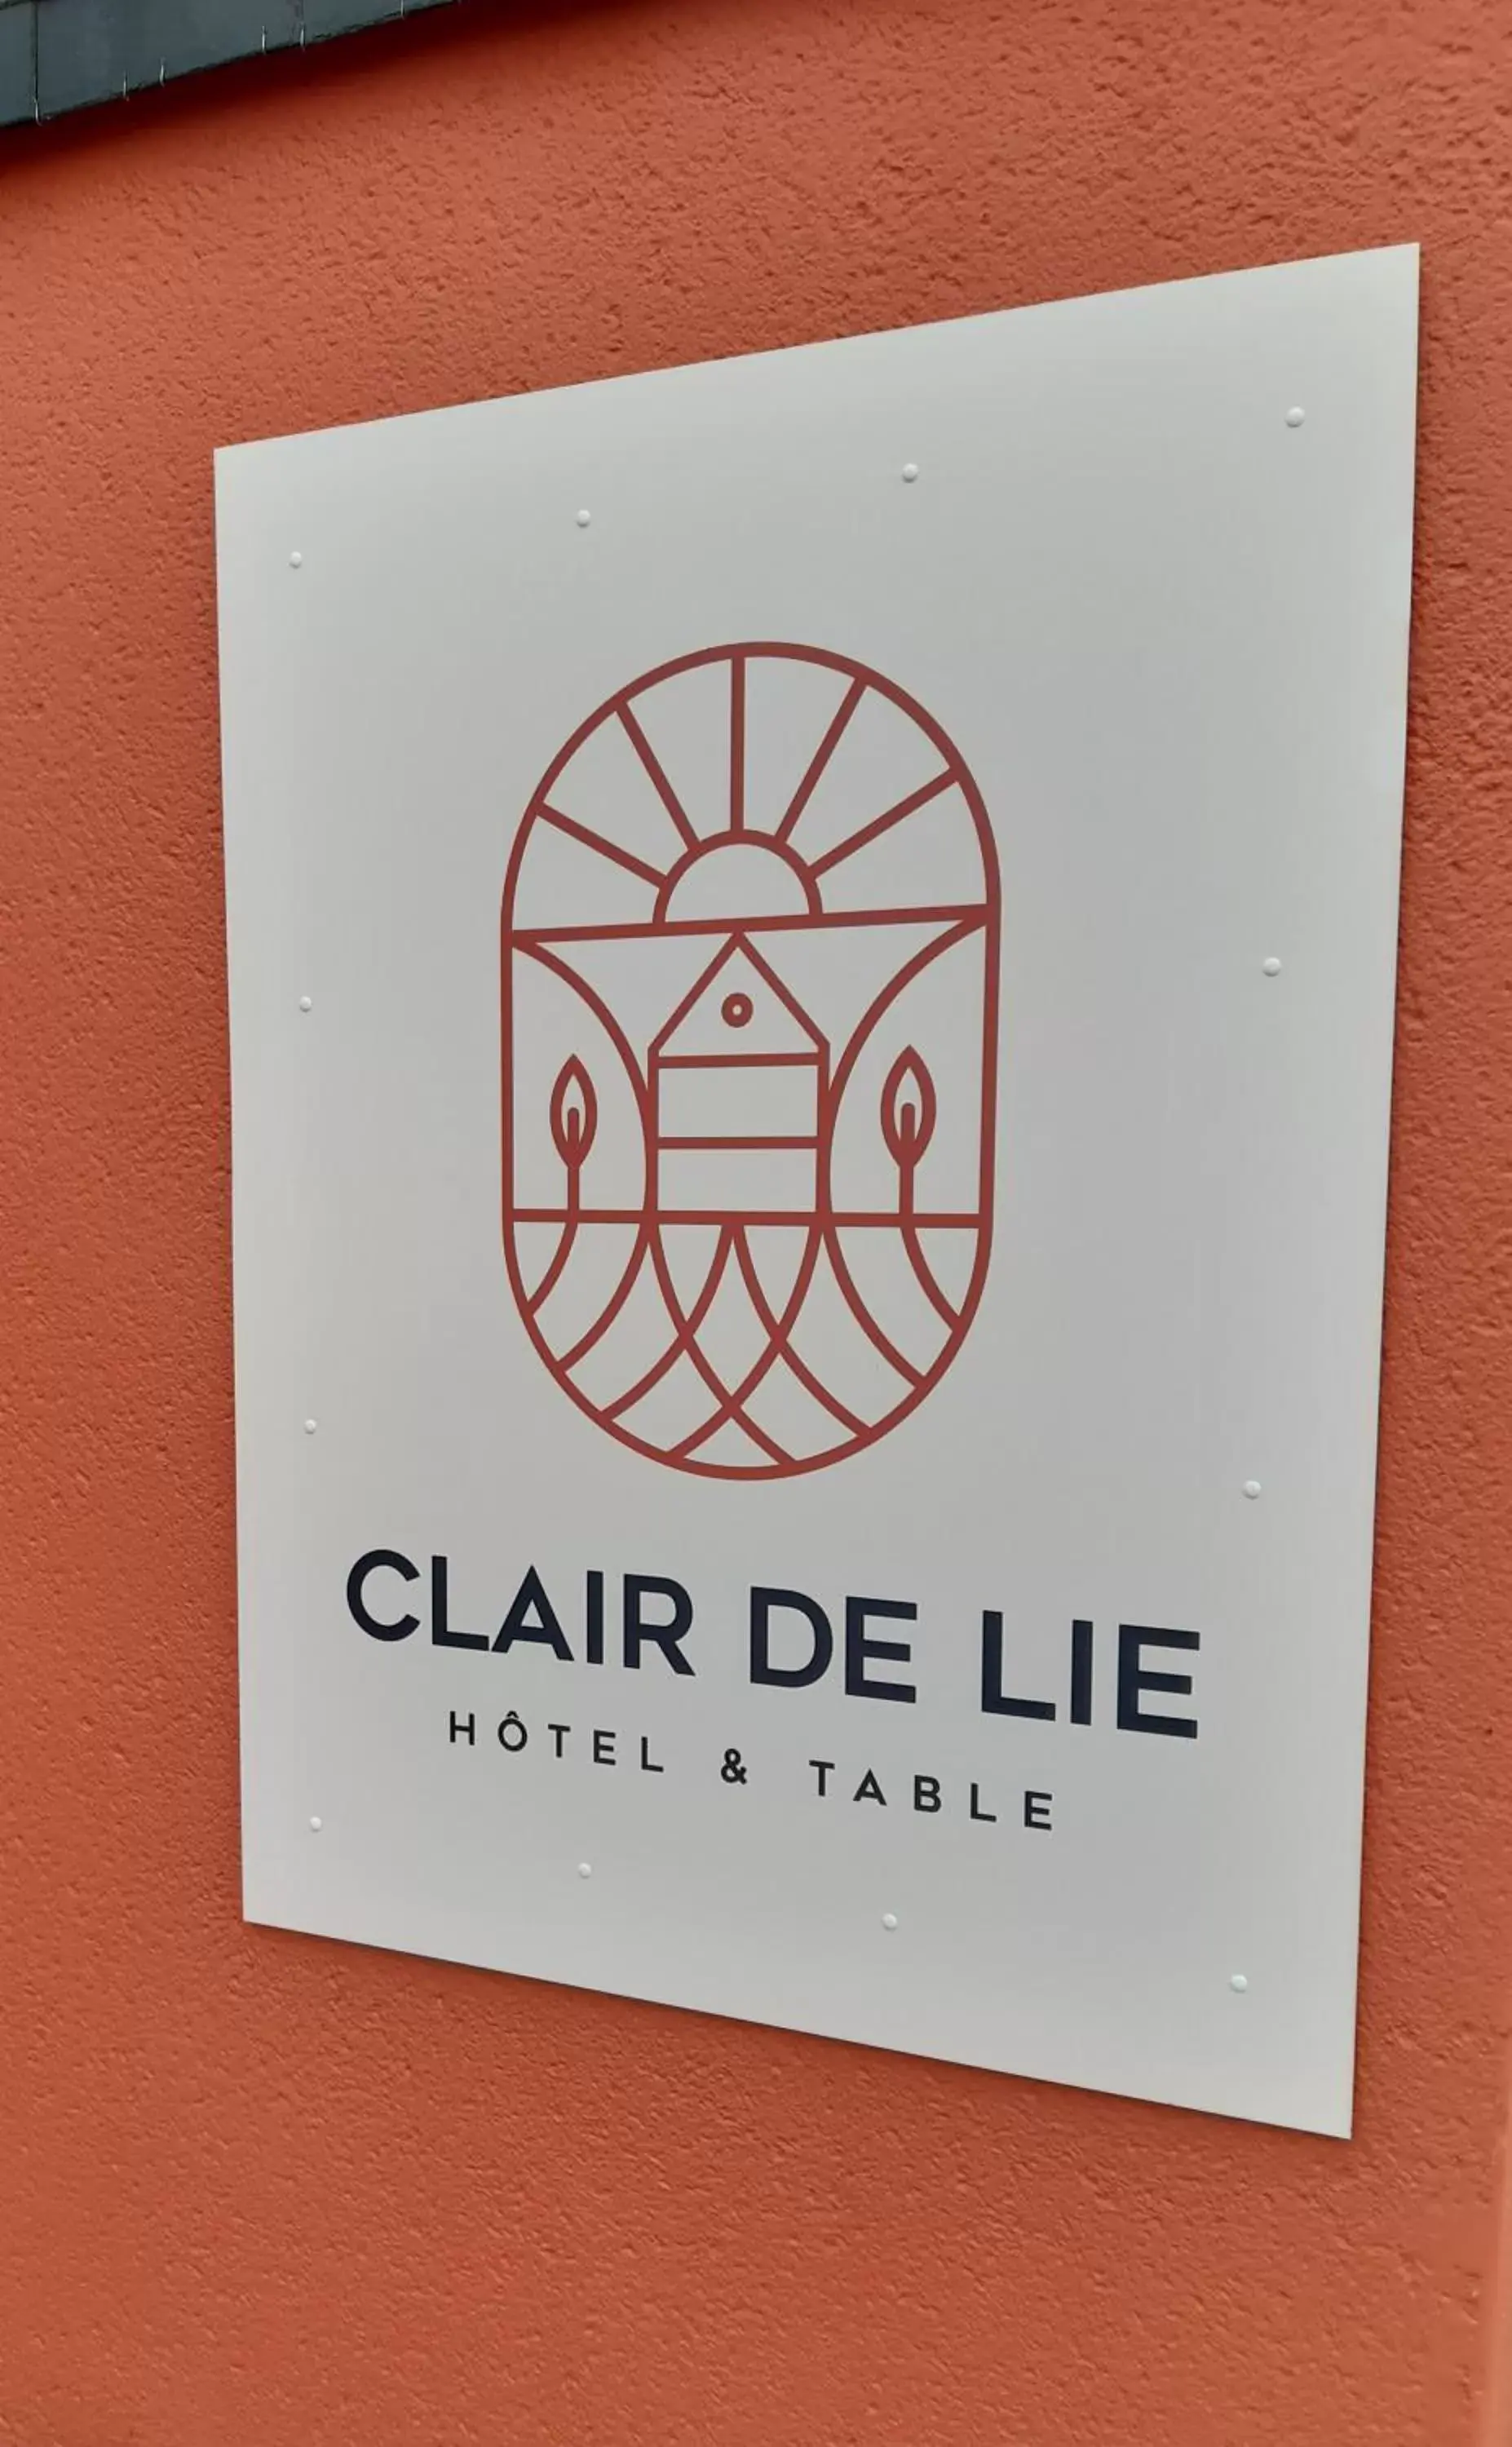 Property logo or sign, Property Logo/Sign in Clair de Lie